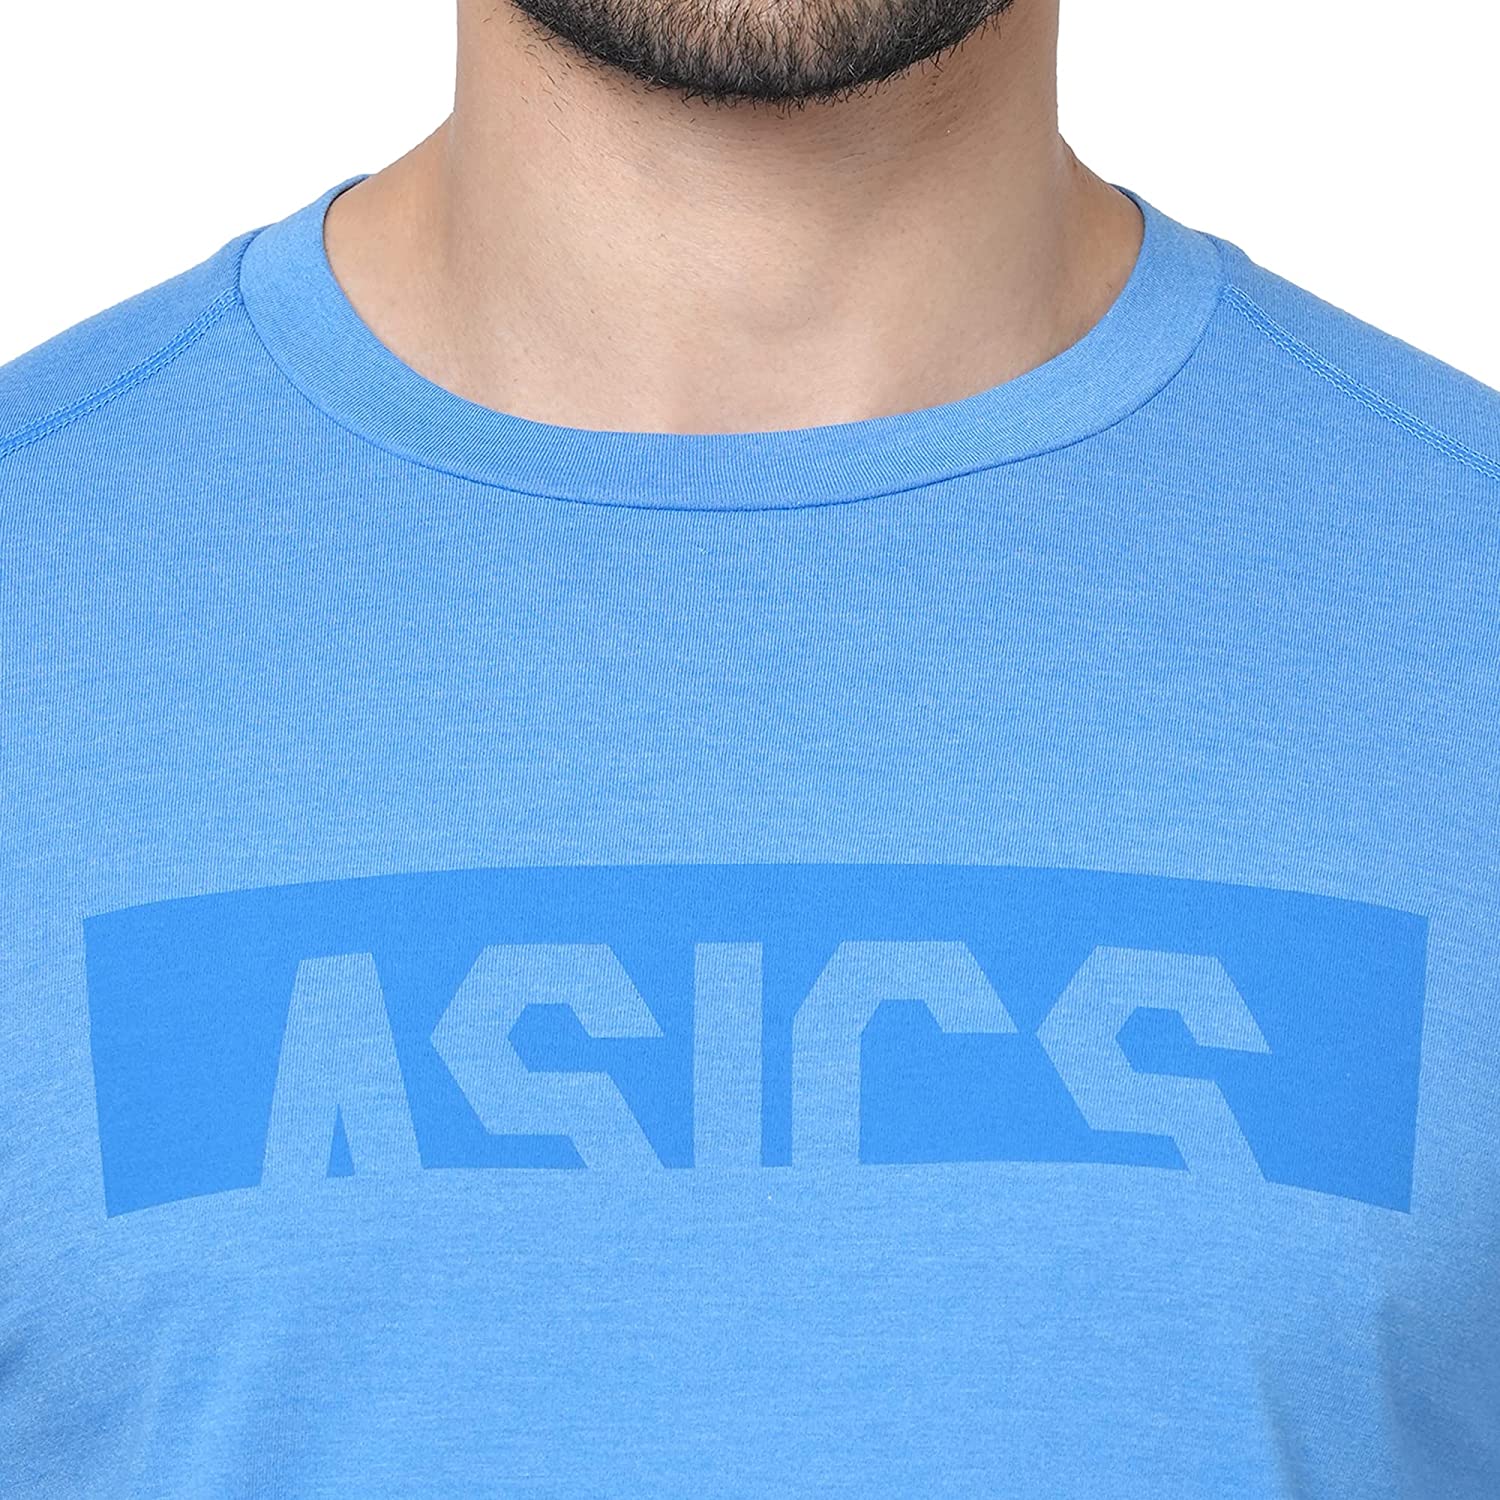 ASICS PRINT SS TOP Men's T-Shirt - Best Price online Prokicksports.com